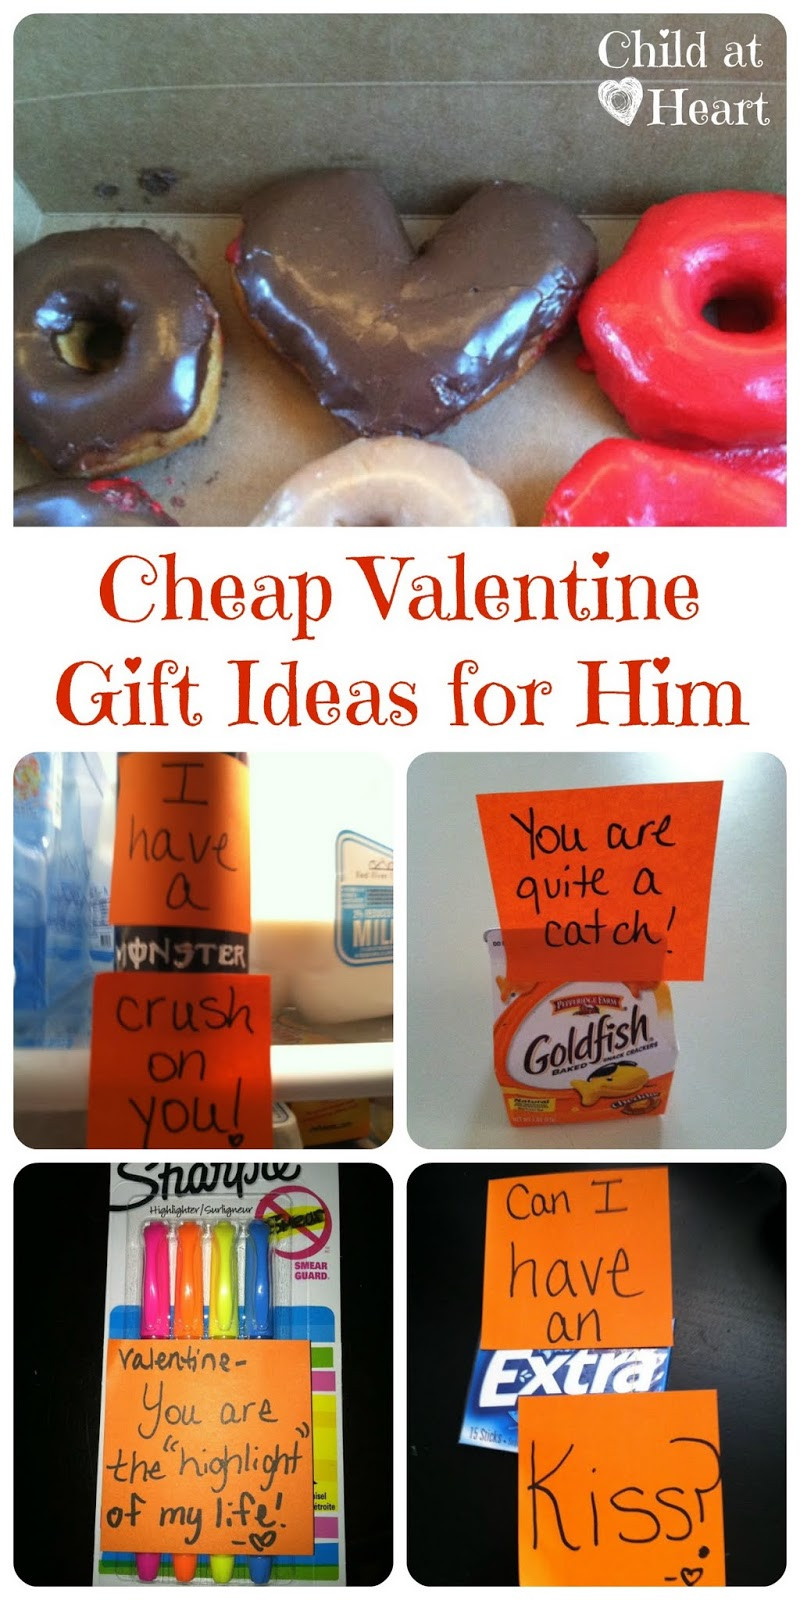 Valentine Days Gift Ideas For Him
 Cheap Valentine Gift Ideas for Him Child at Heart Blog